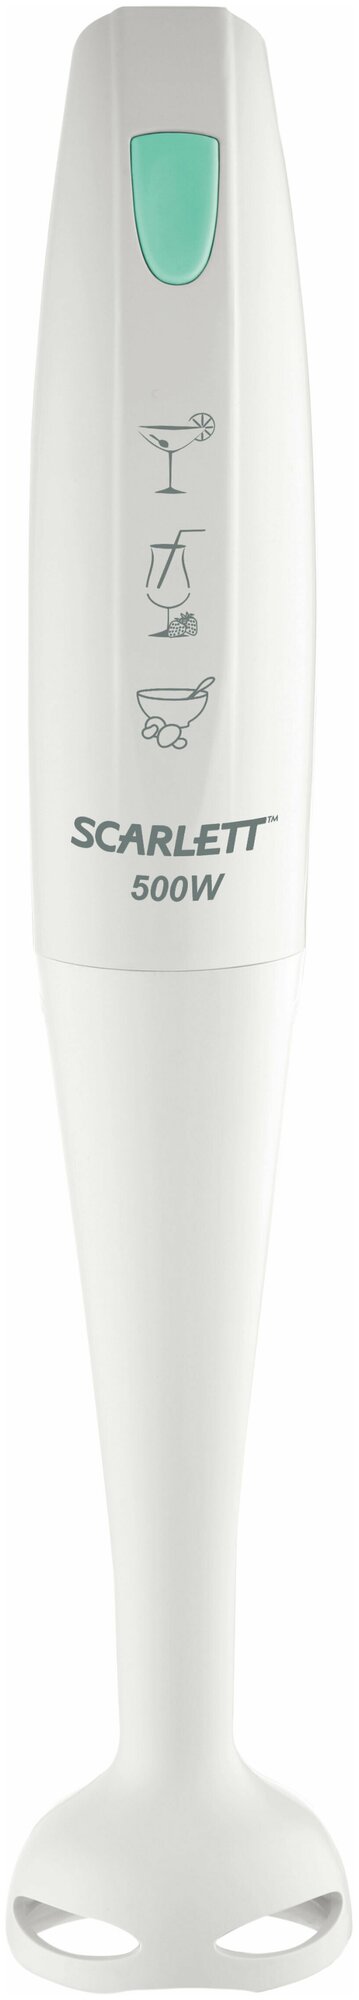 Погружной блендер Scarlett SC-HB42S08